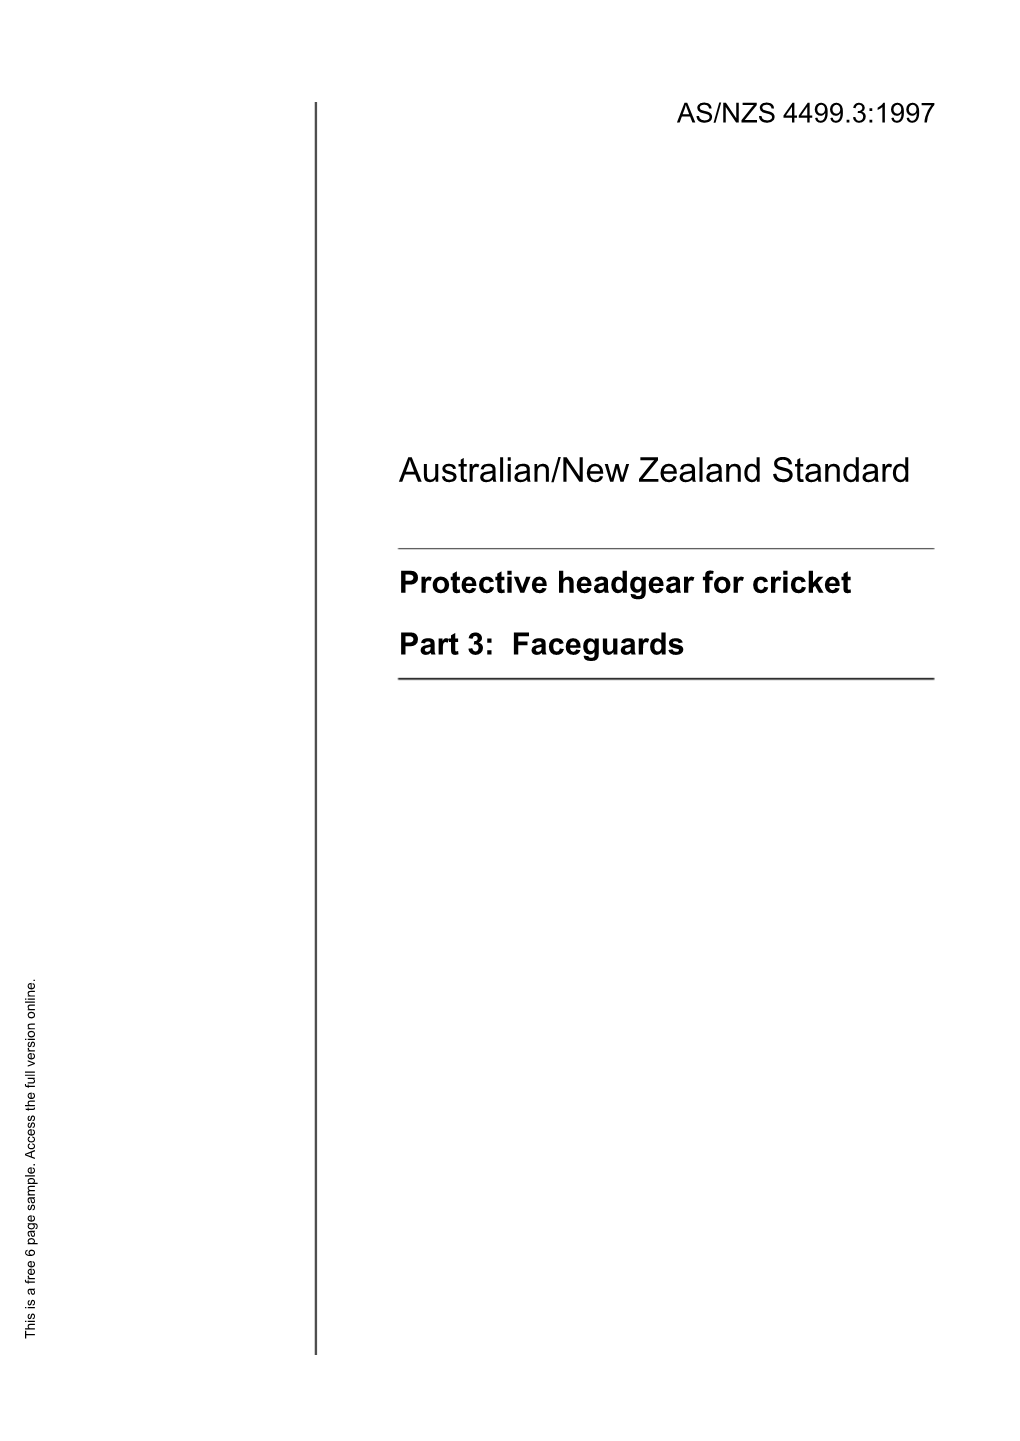 AS/NZS 4499.3:1997 Protective Headgear for Cricket